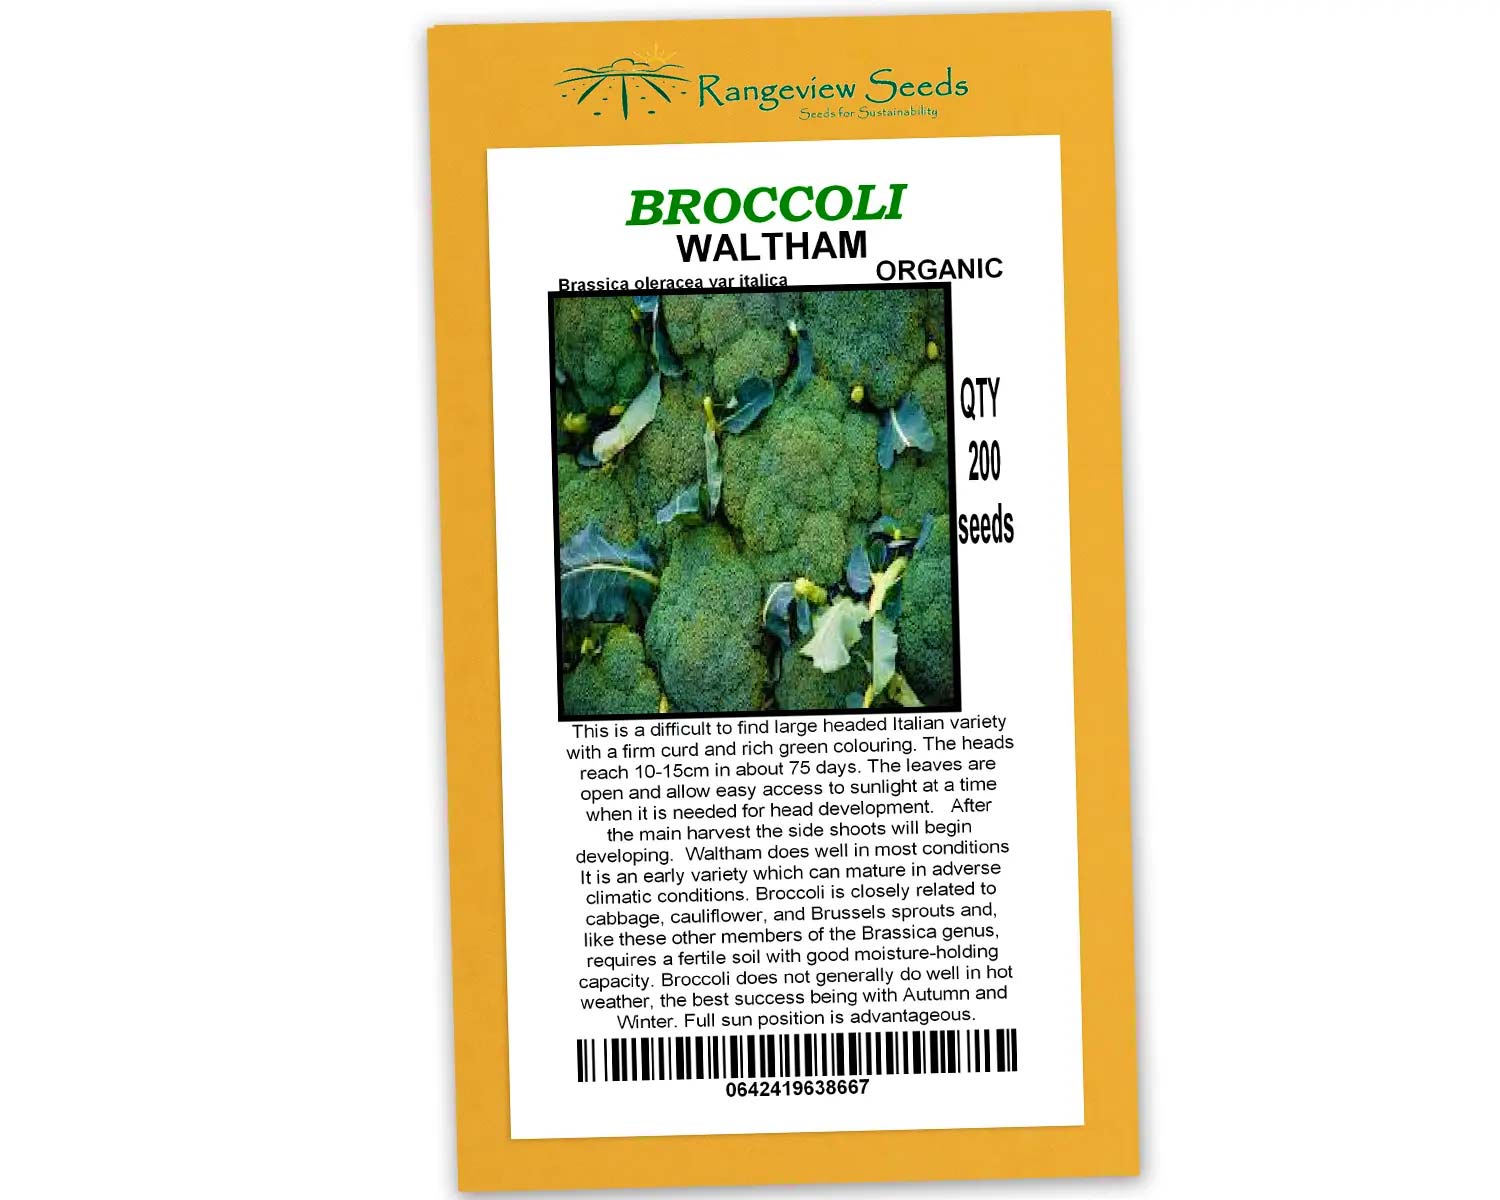 Broccoli Waltham - Rangeview Seeds